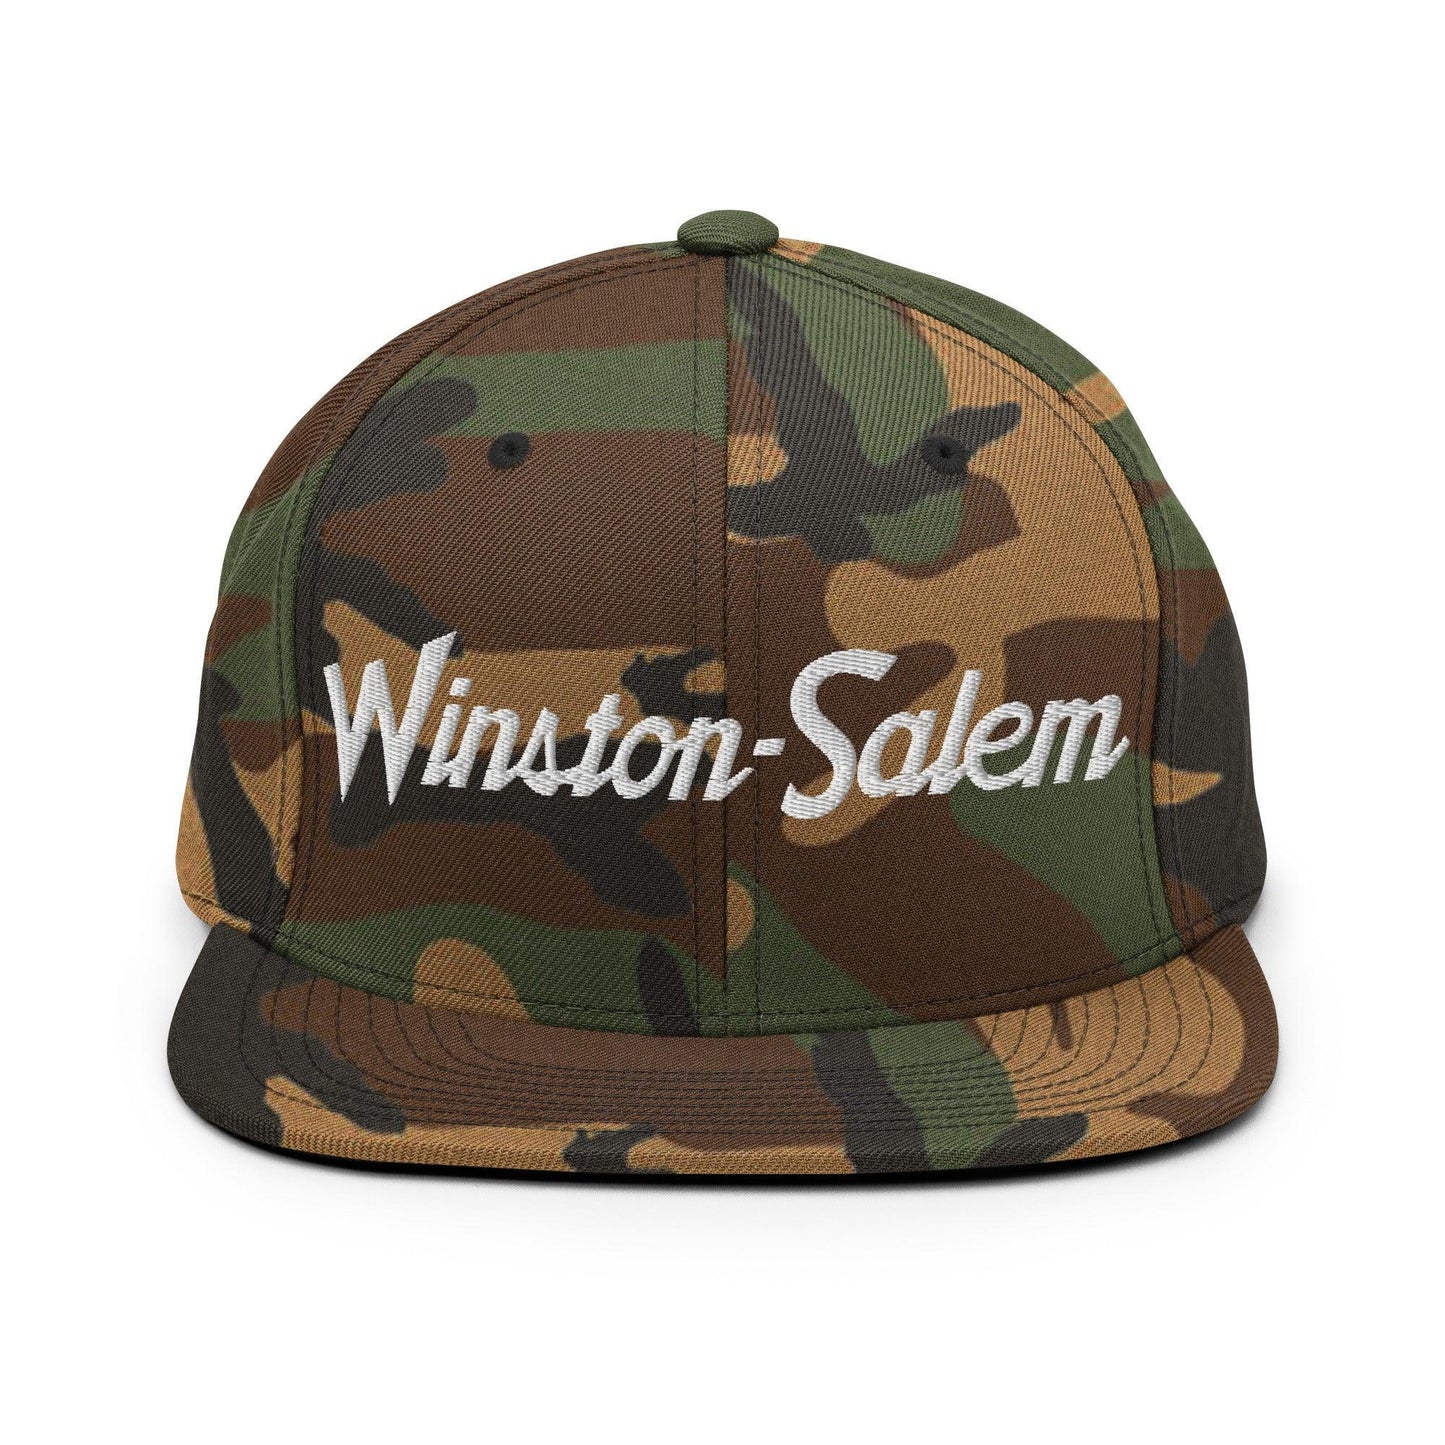 Winston-Salem Script Snapback Hat Green Camo